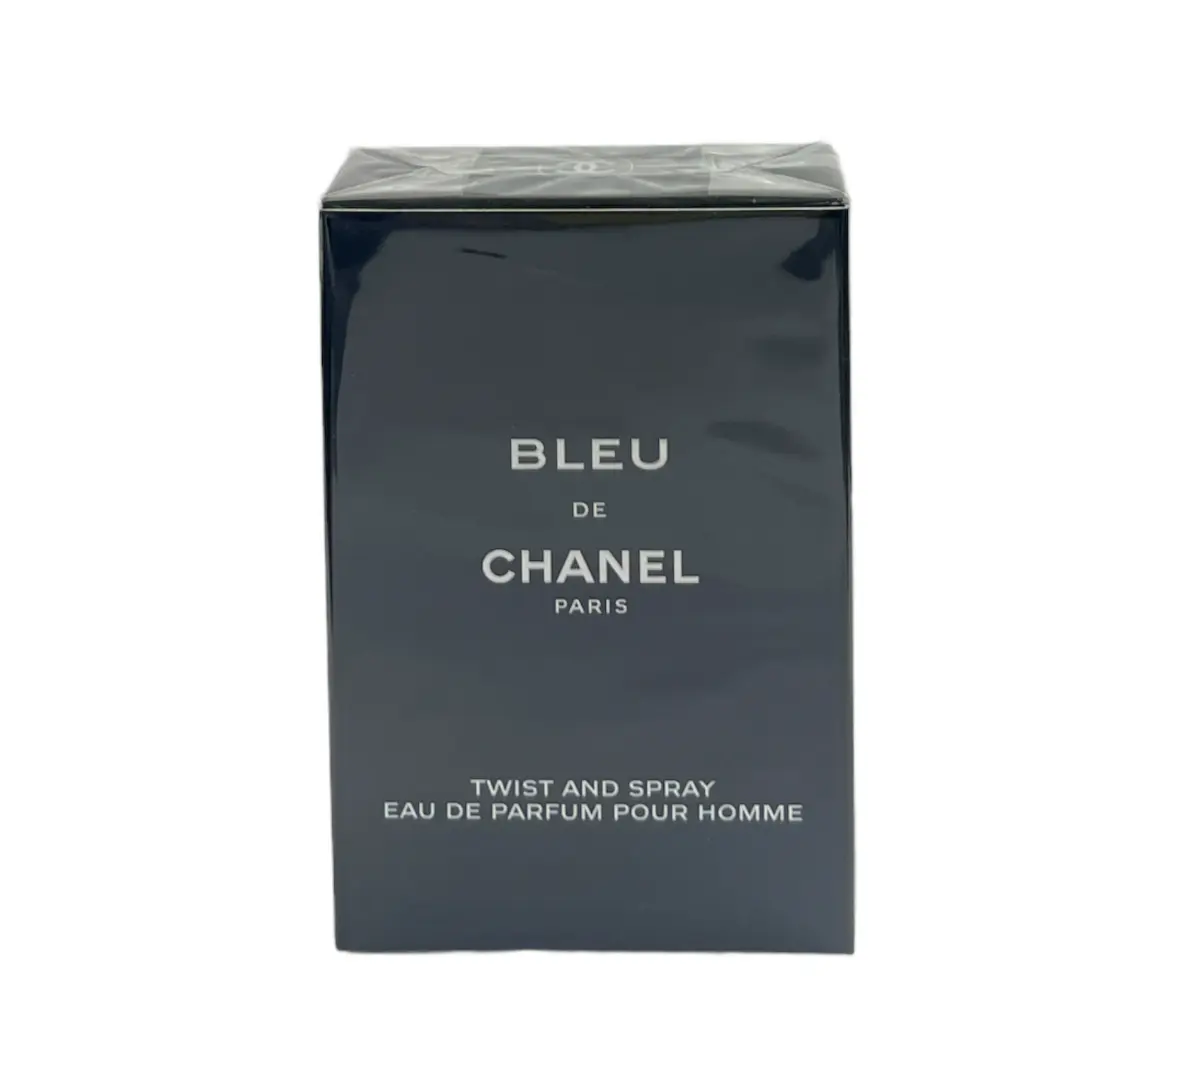 chanel bleu de chanel parfum 100ml